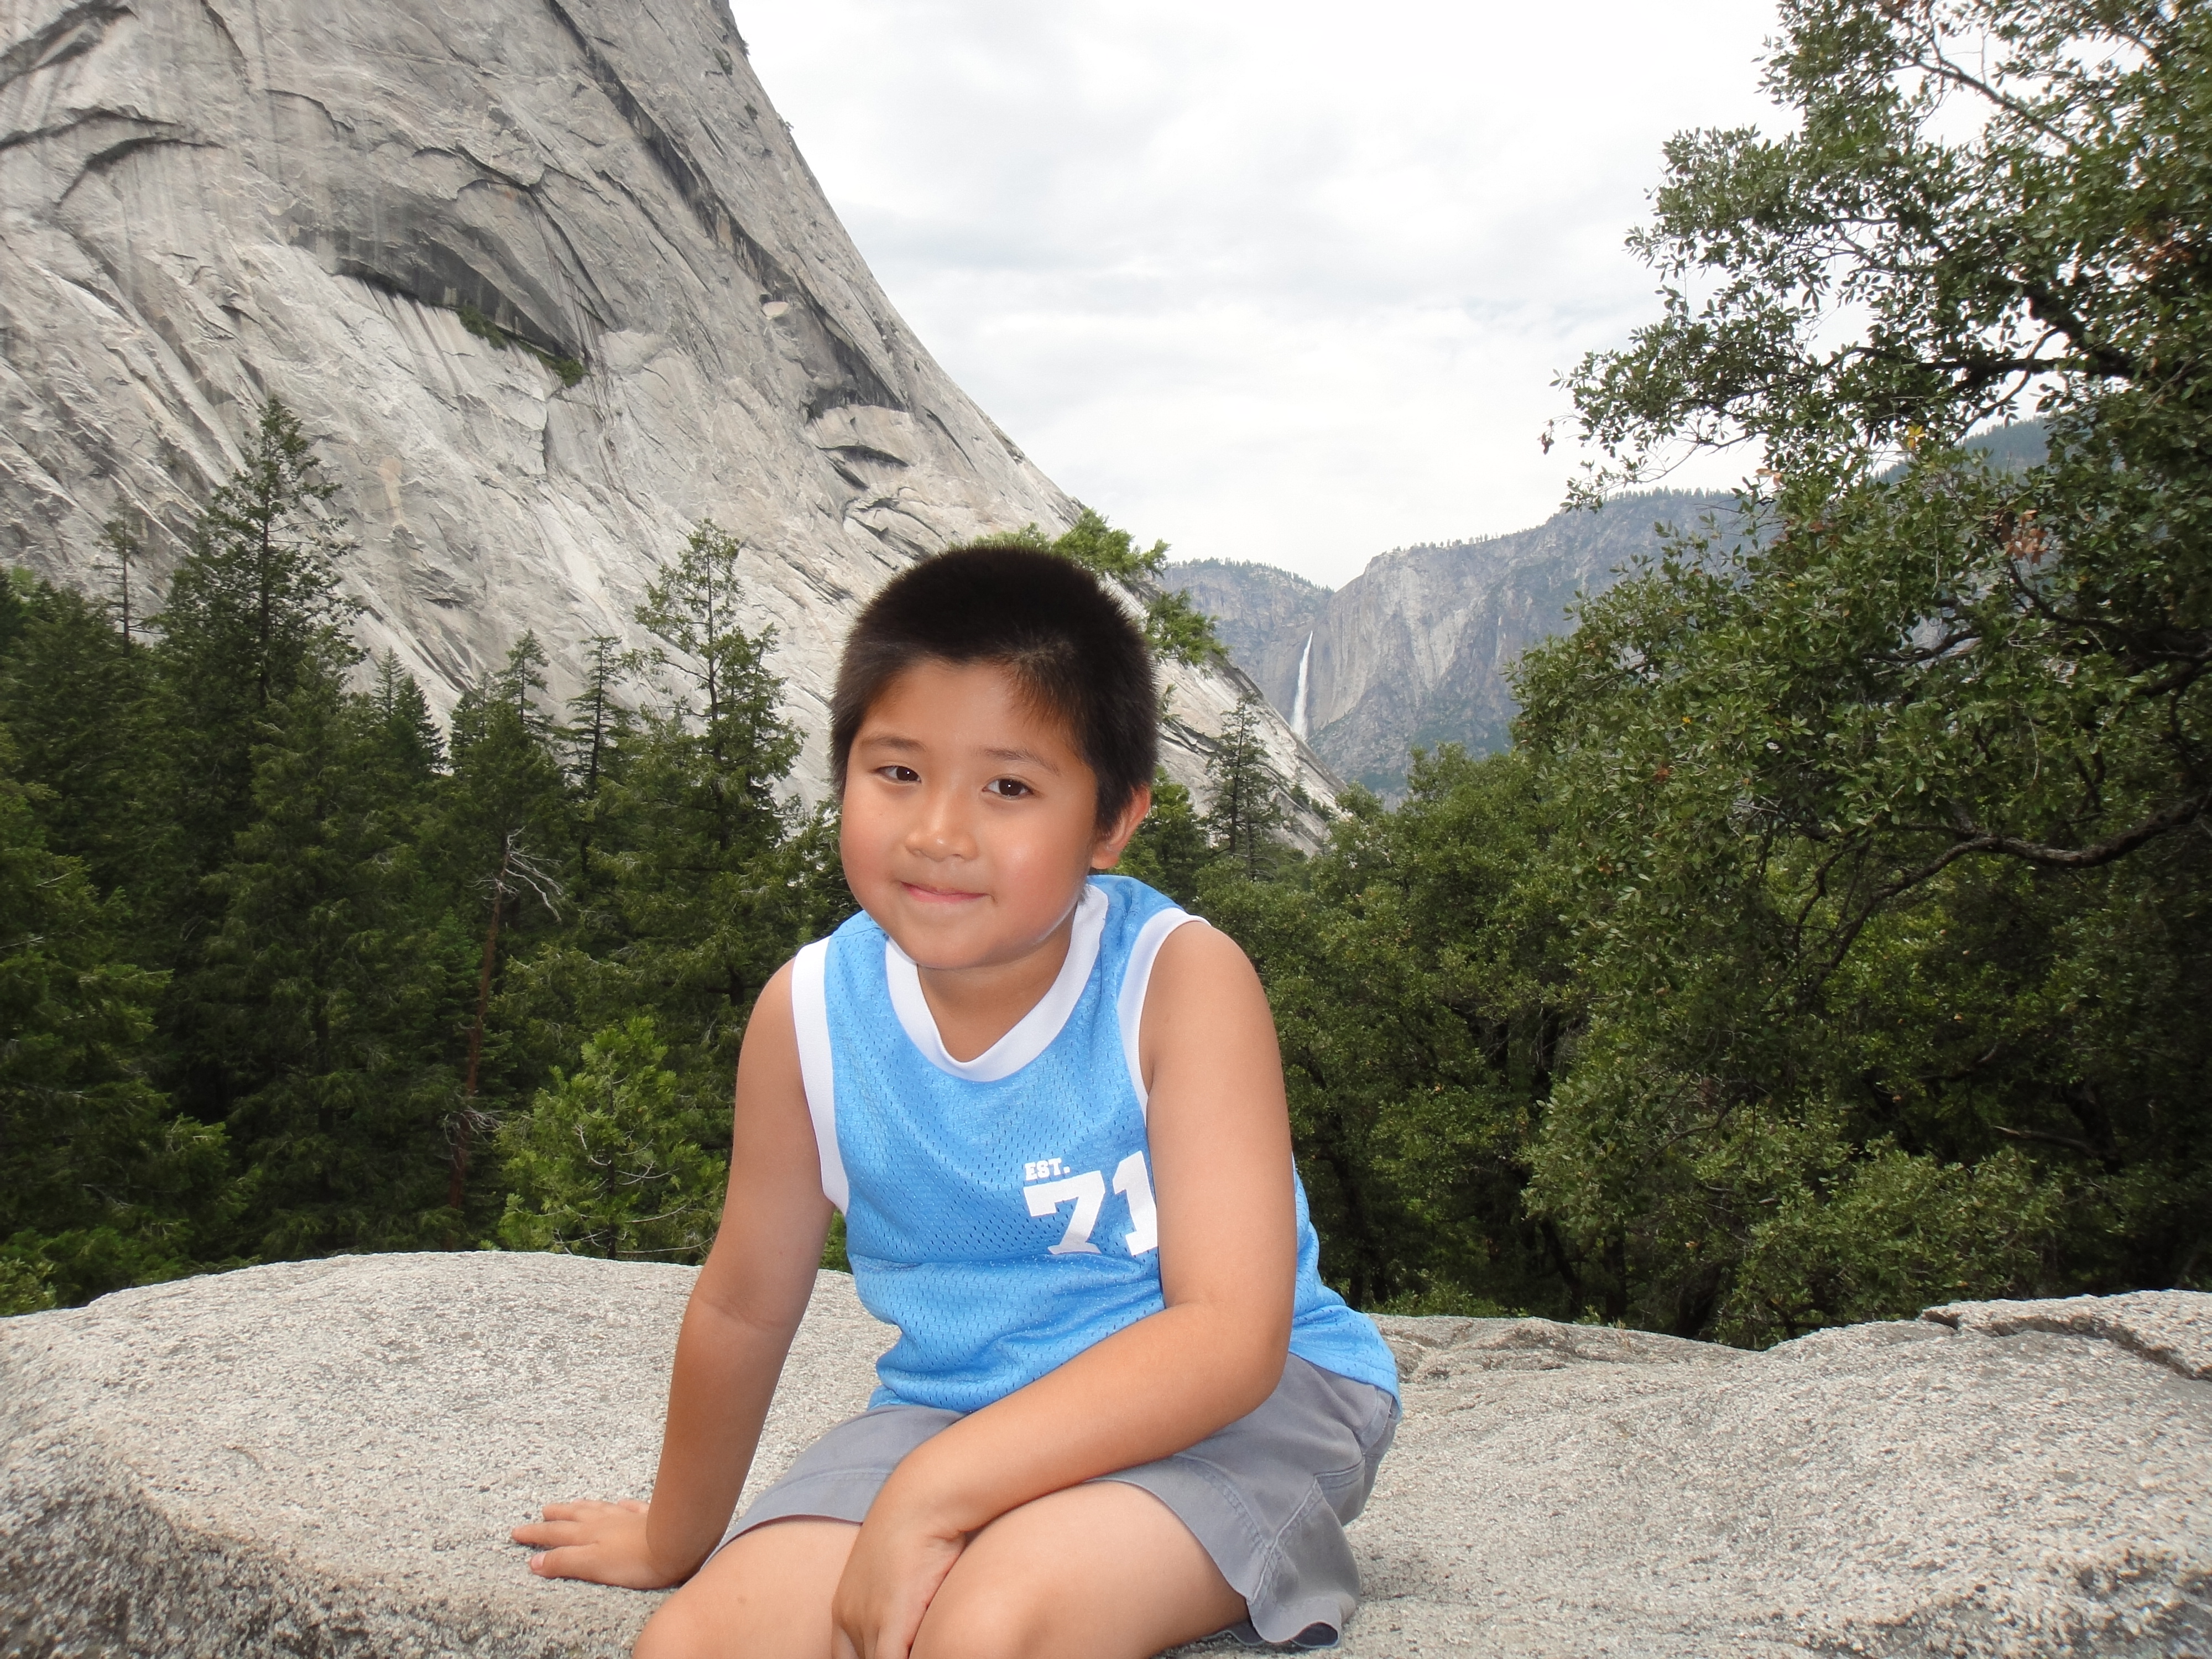 William sitting on a rock at Yosemite